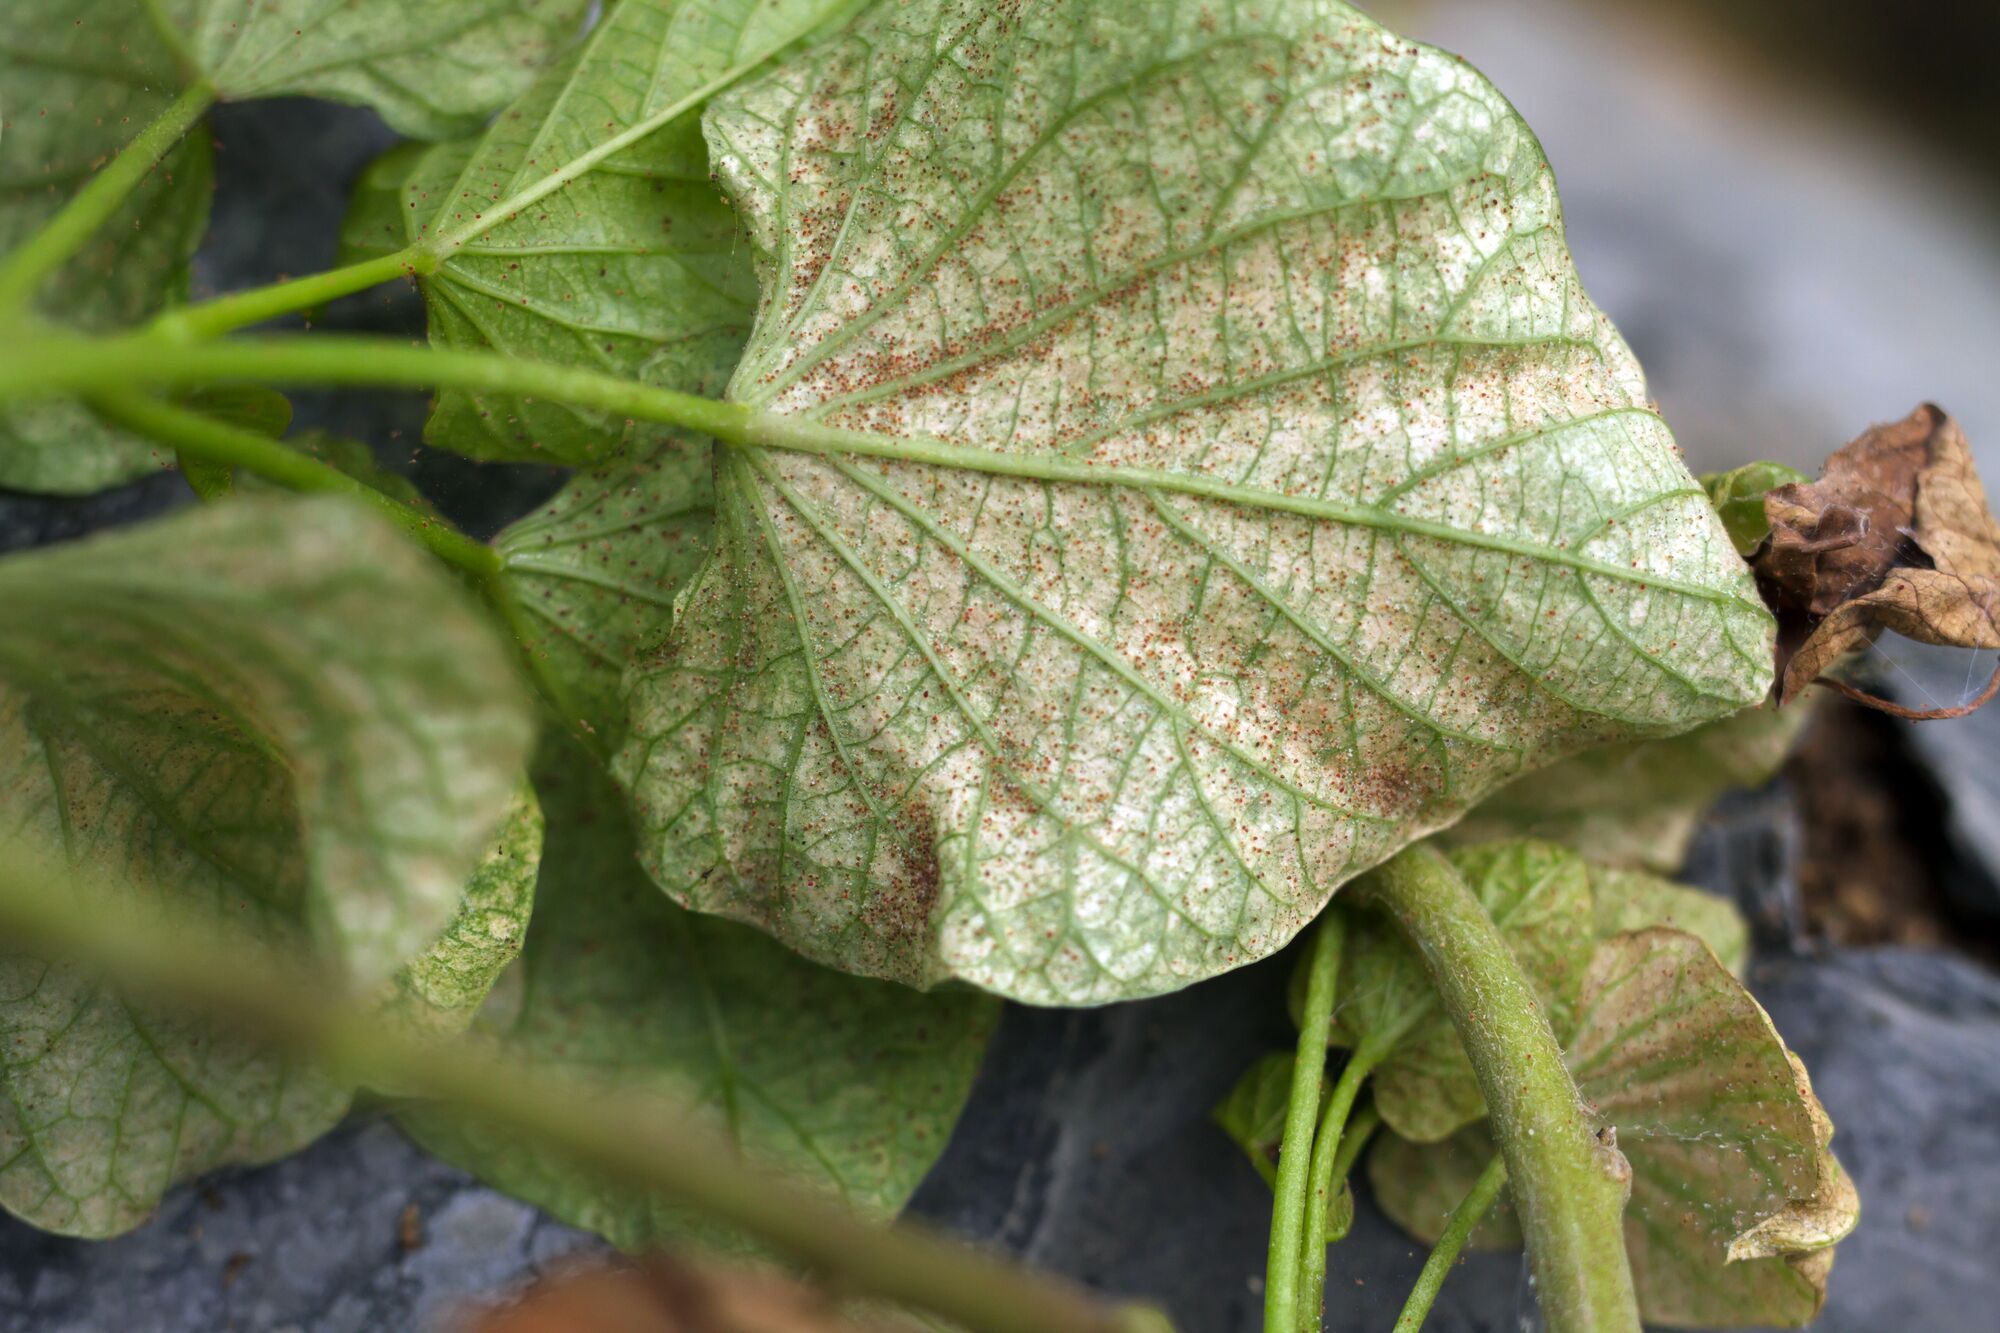 XLarge-Seezon - Get rid of plant mites through natural methods